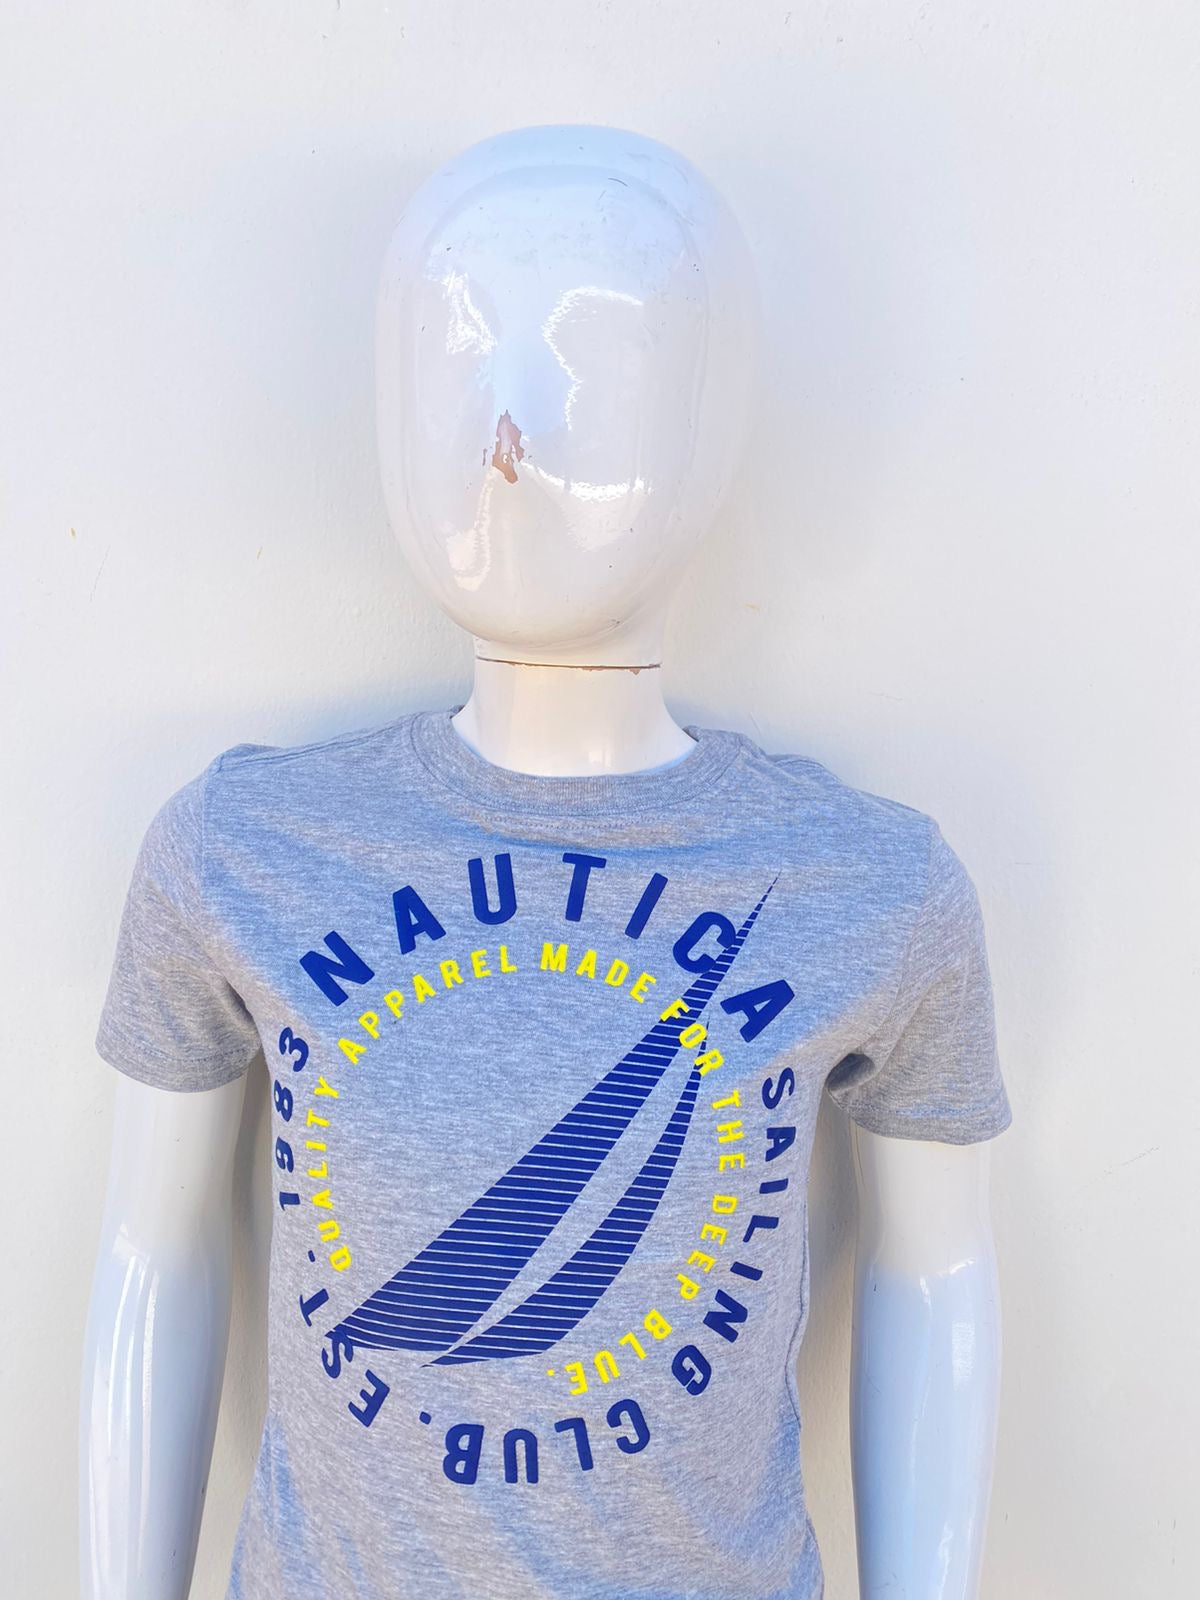 T-shirt Nautica original gris con estampado de letras NAUTICA en azul marino.